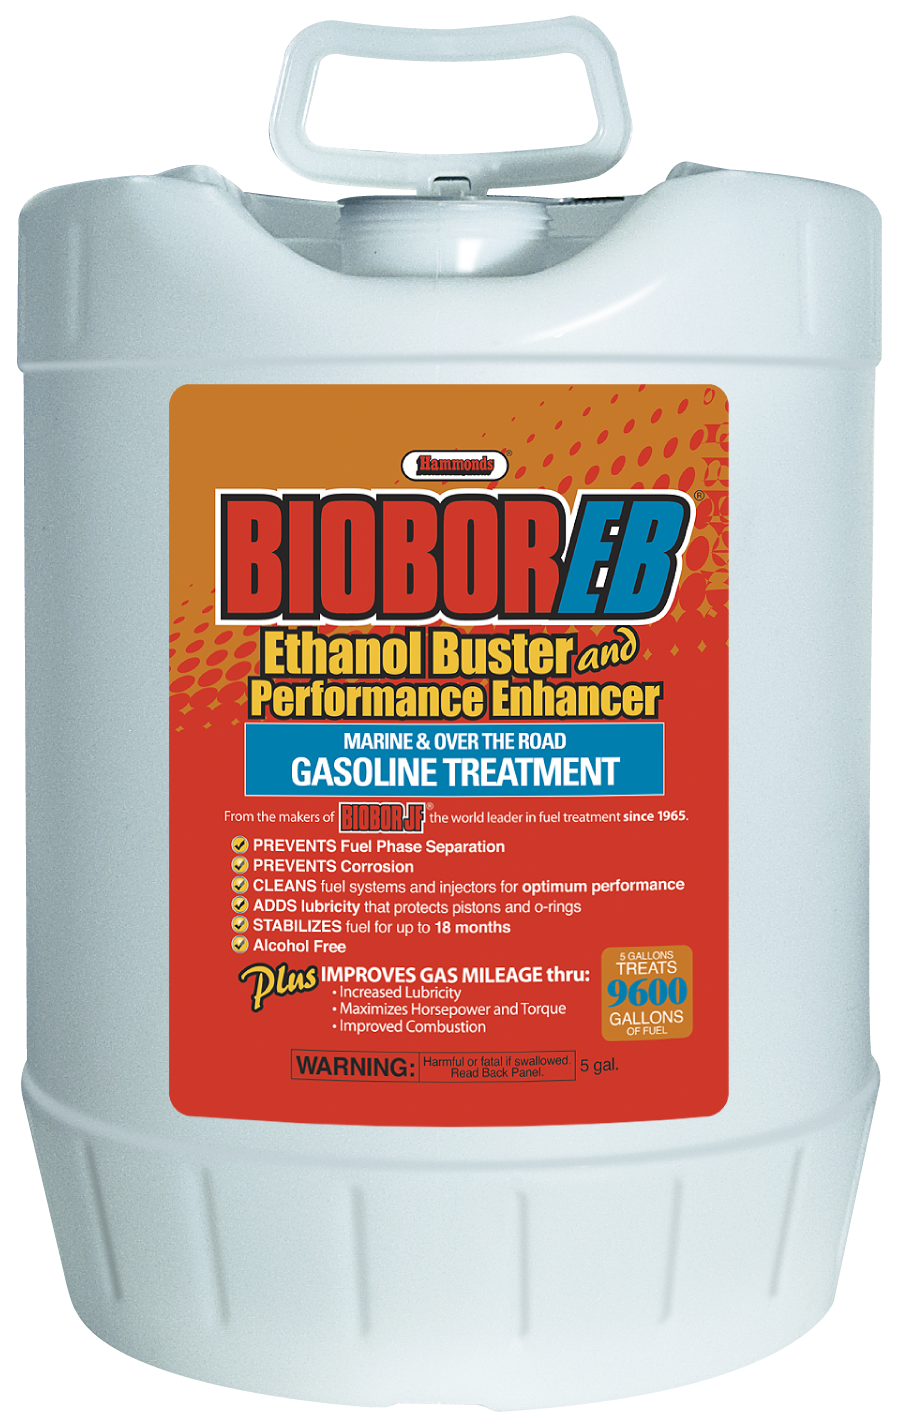 Biobor EB 5 gal. - Ethanol Buster and Performance Enhancer Image